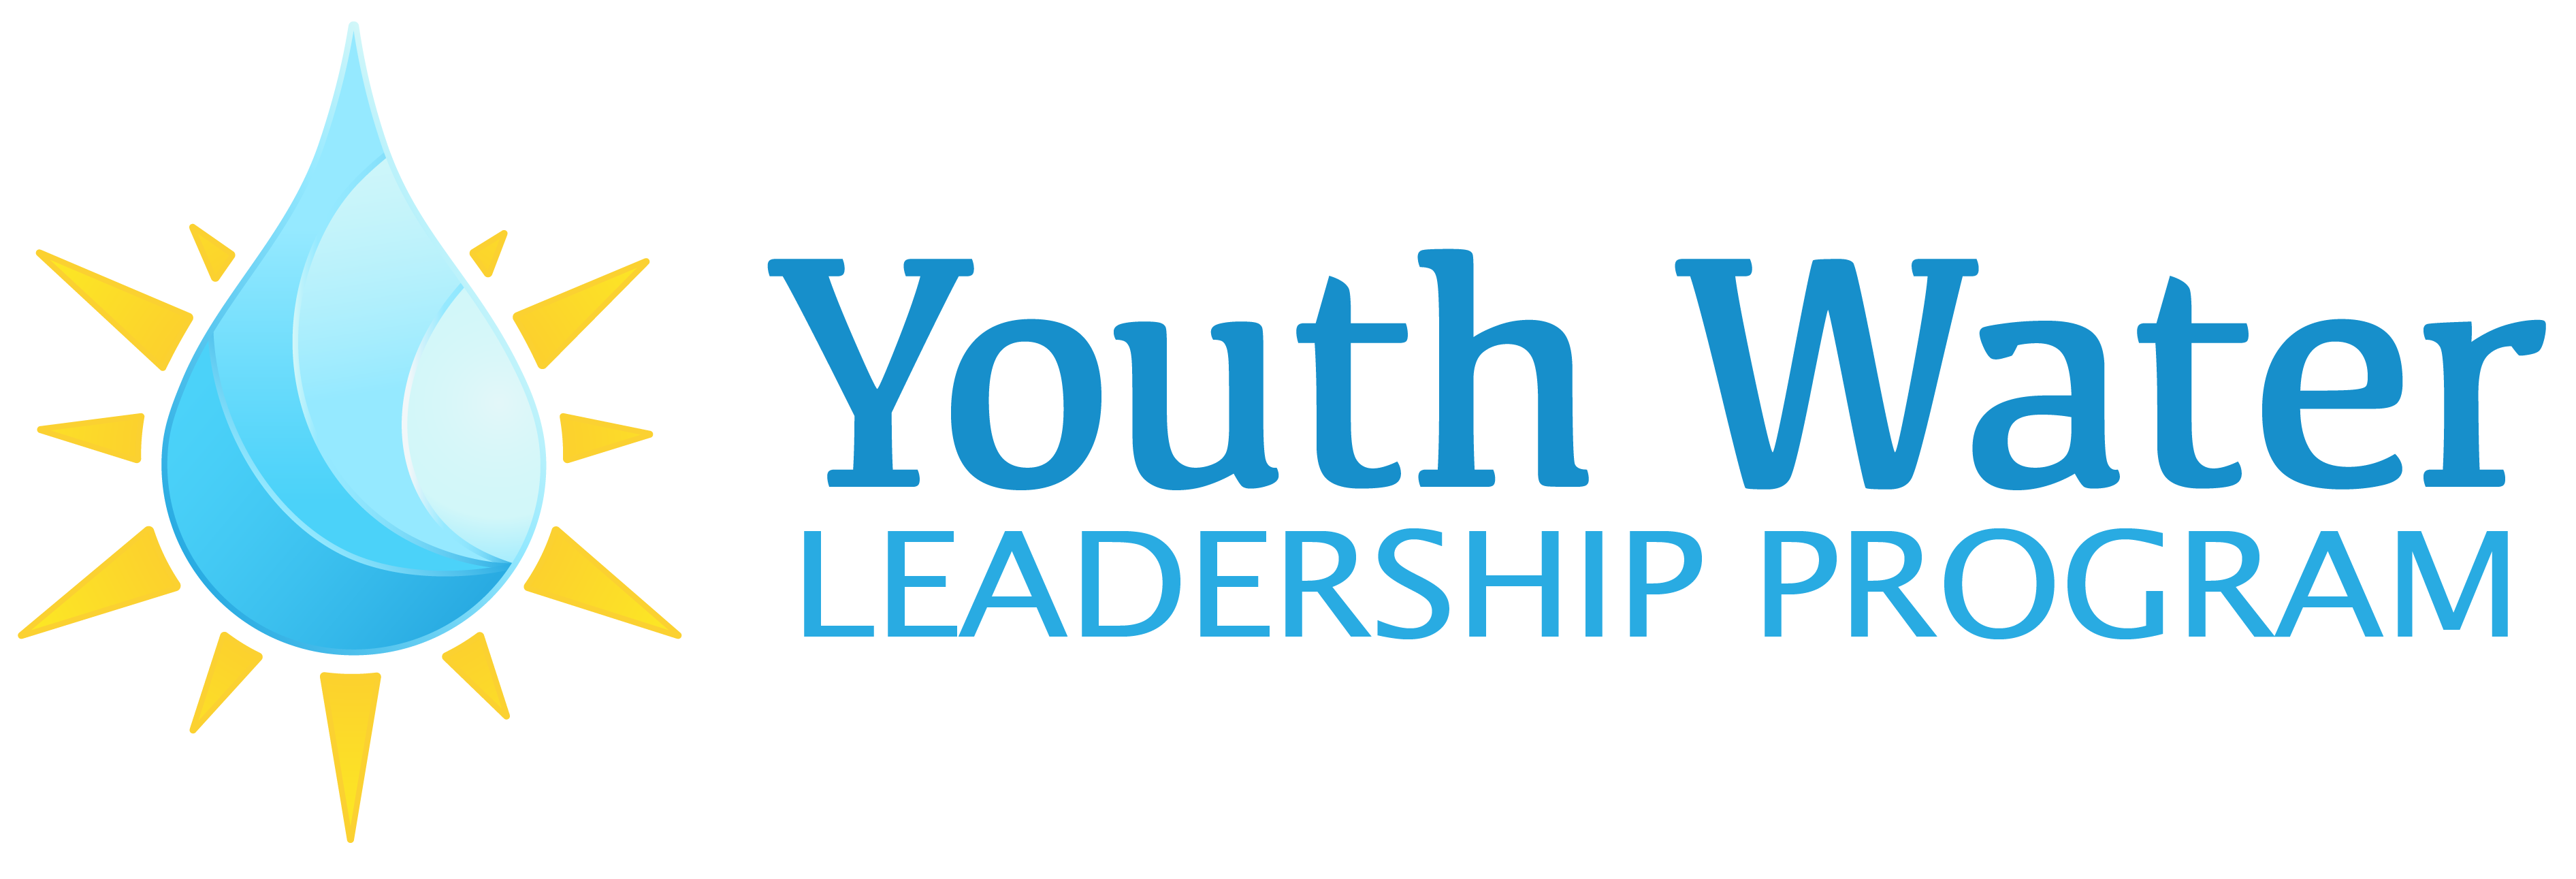 Youth Water Leadership Program logo